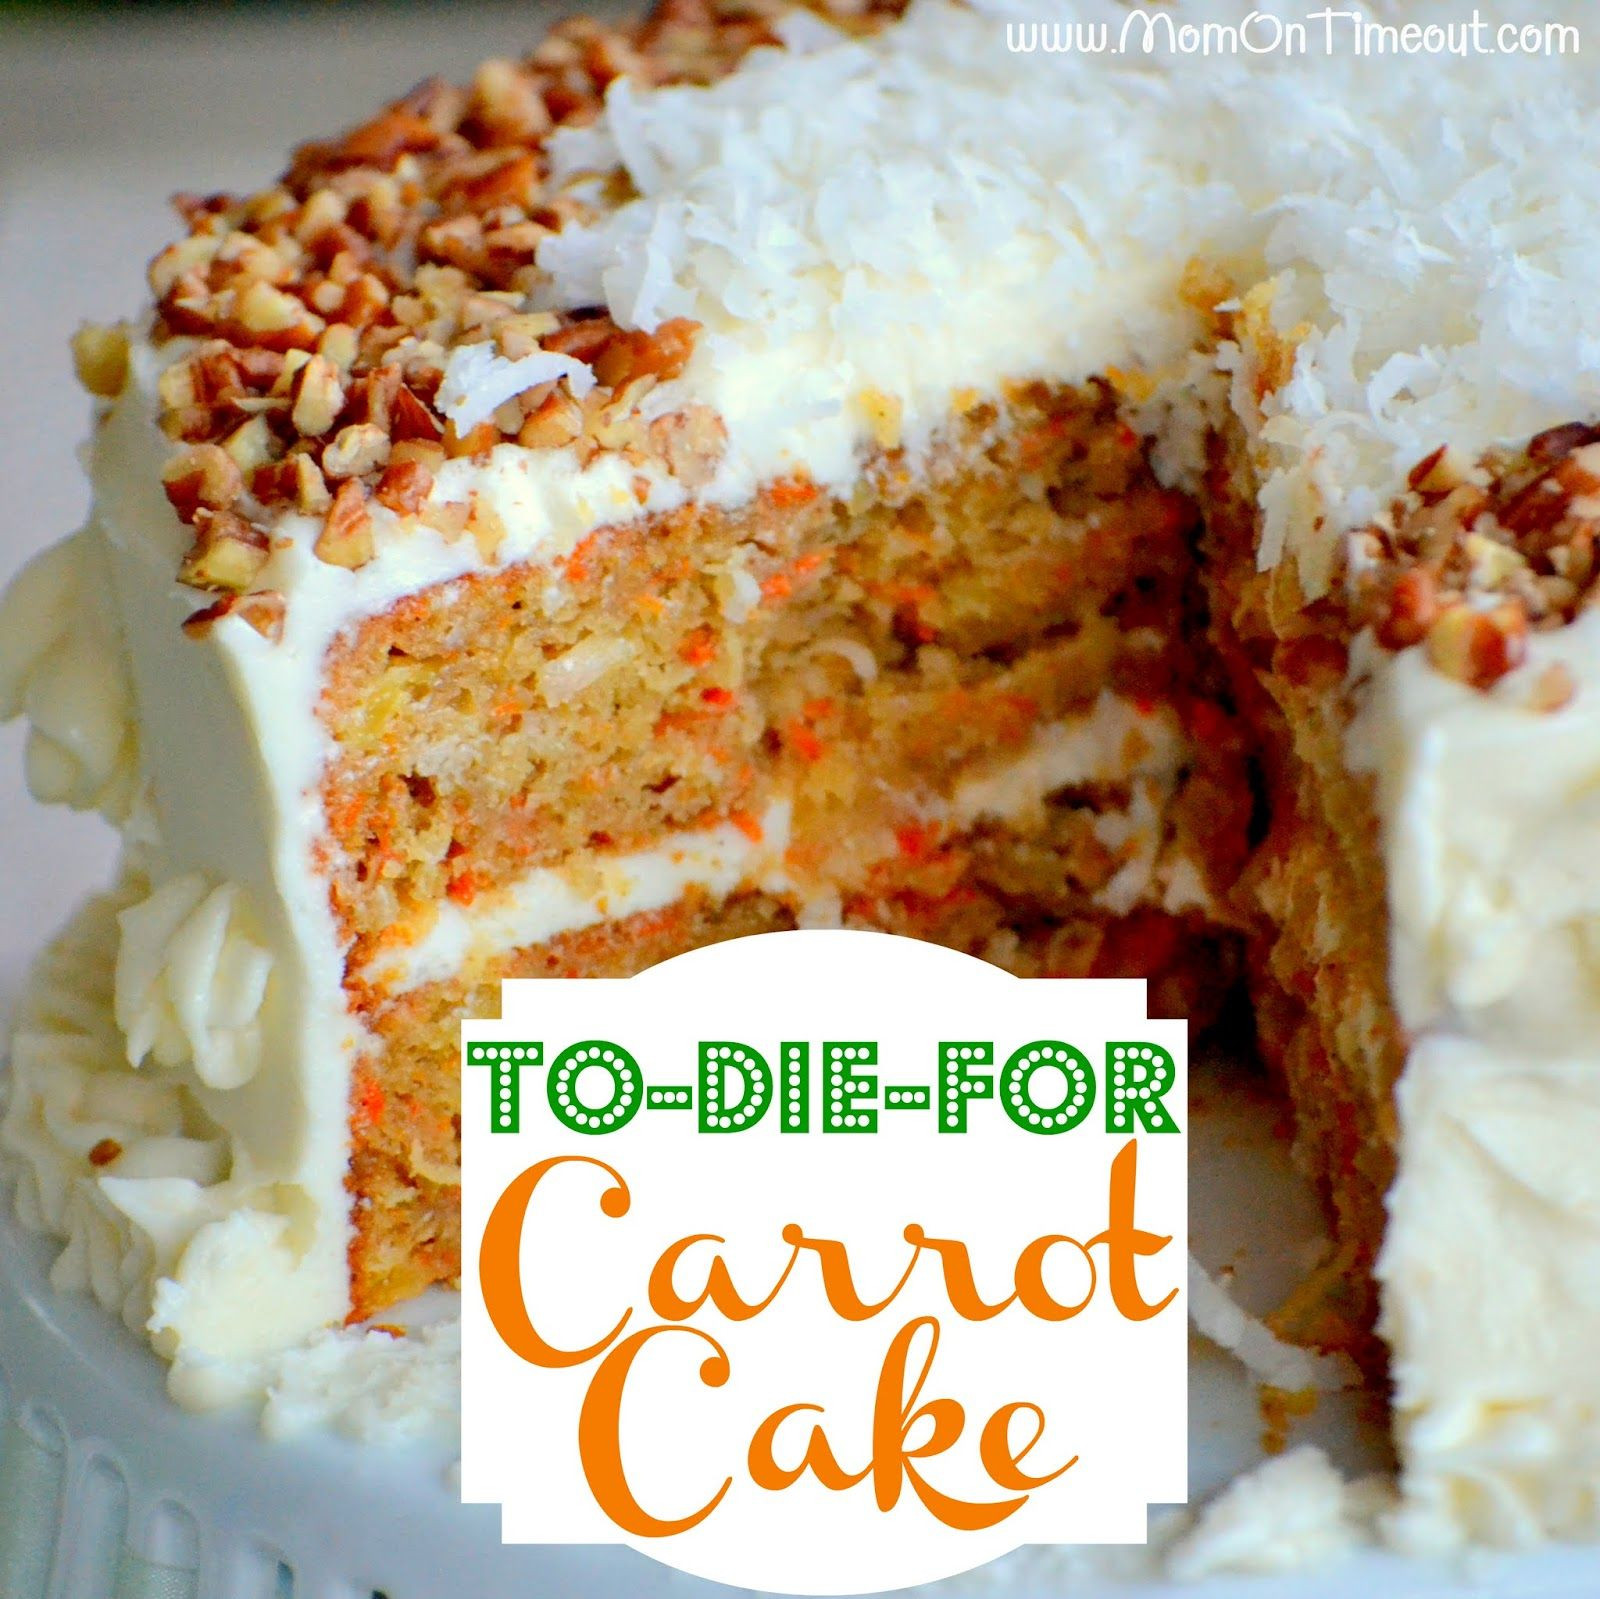 Award Winning Carrot Cake Recipe
 award winning carrot cake recipe with pineapple